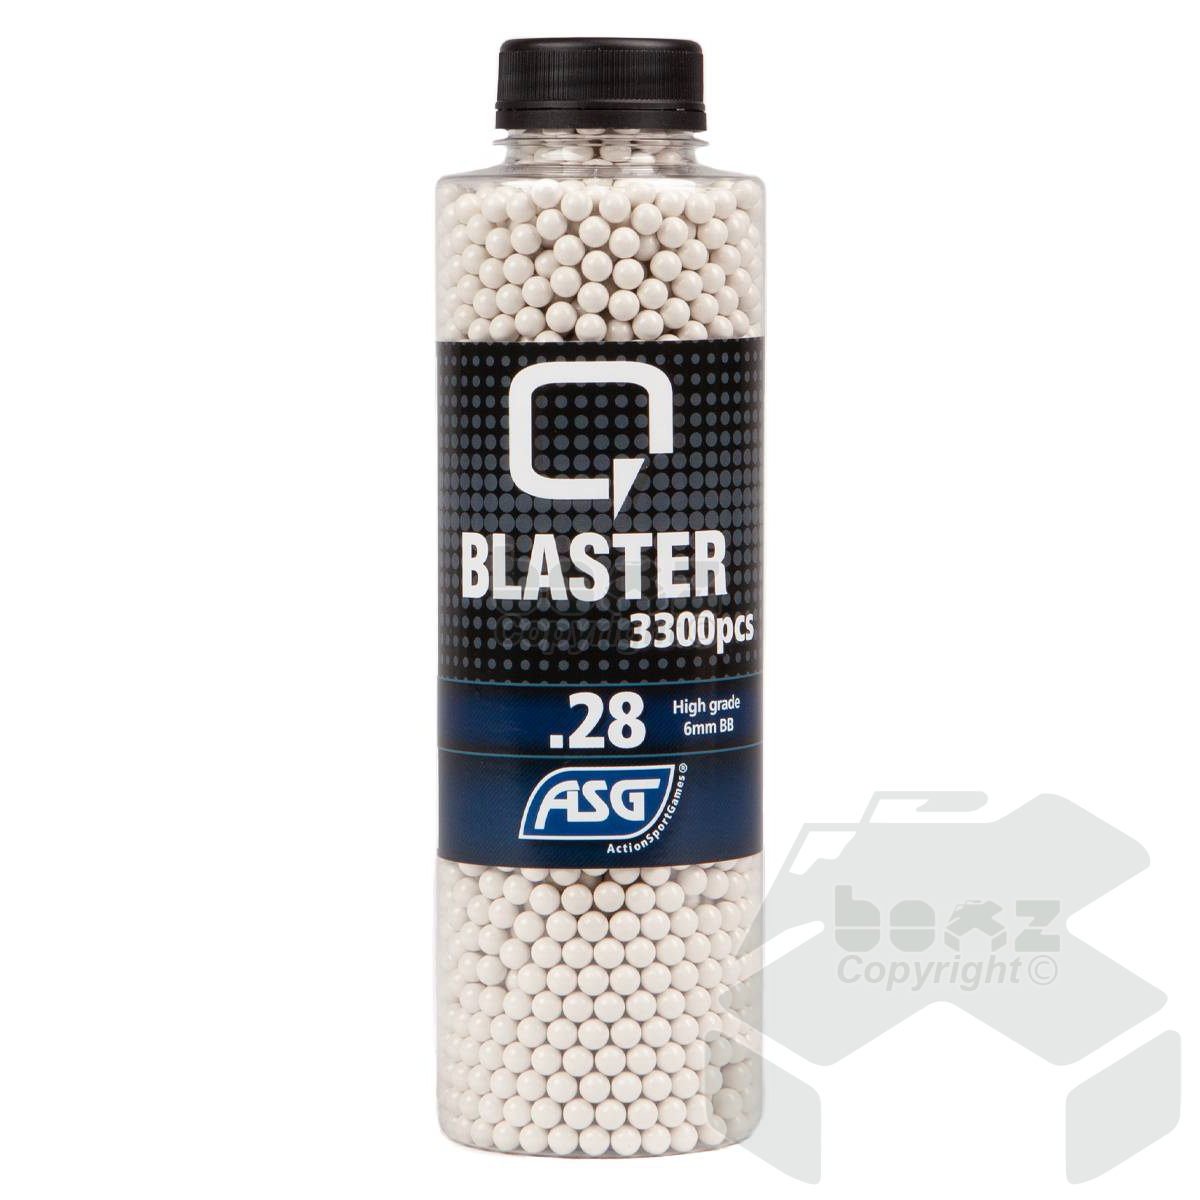 Q Blaster (ASG) 0.28G 6mm BB 3300 Pcs Bottle - White